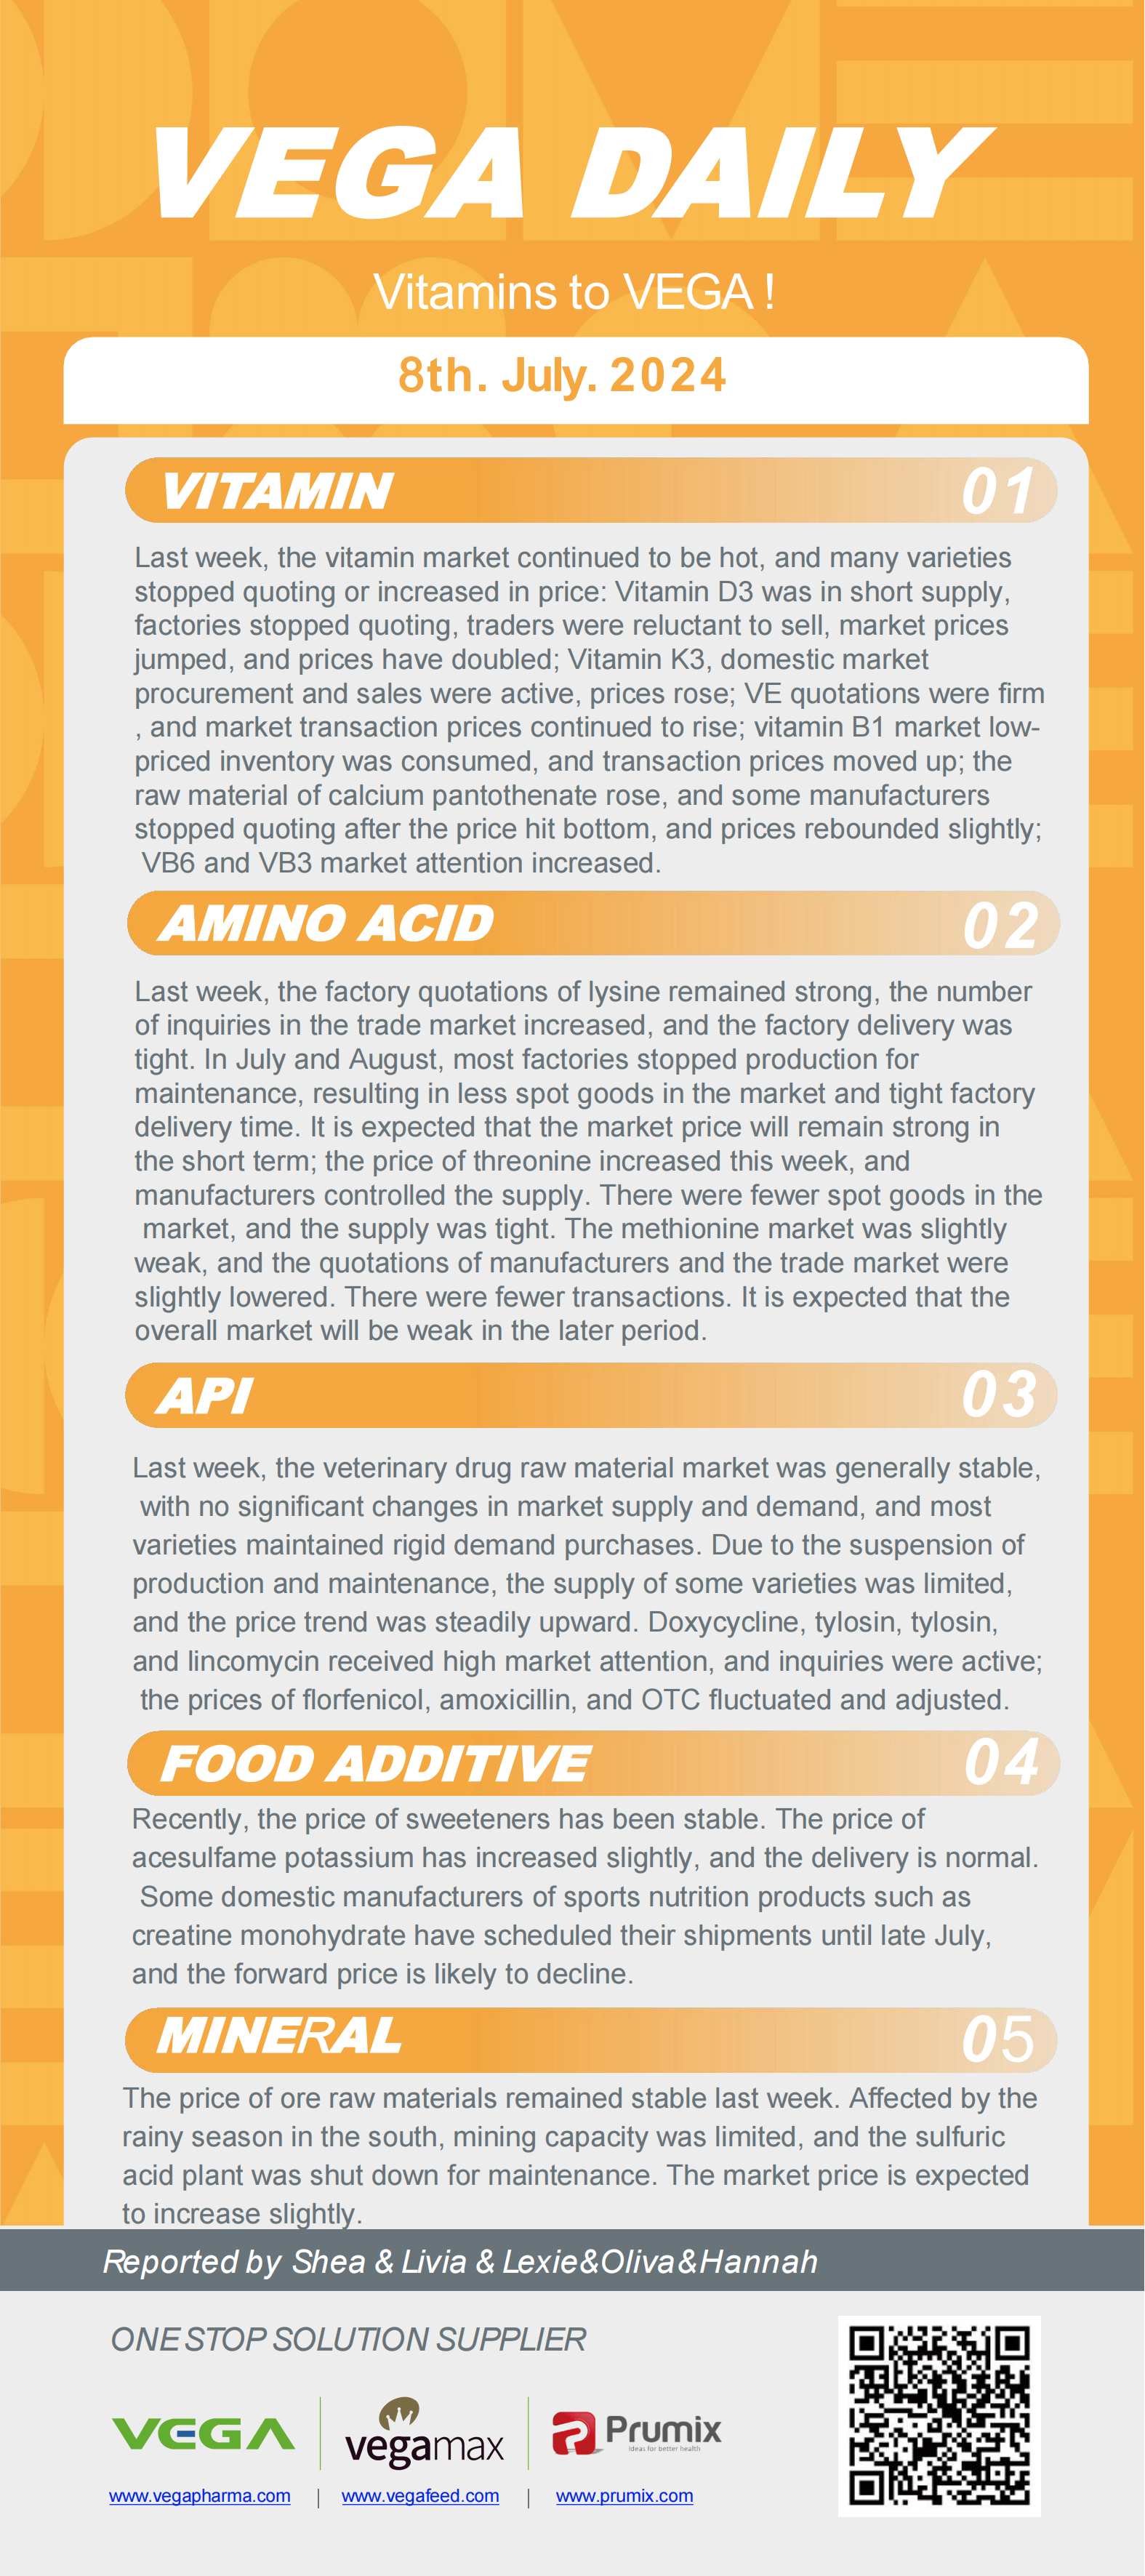 Vega Daily Dated on Jul 8th 2024 Vitamin Amino Acid APl Food Additives.png